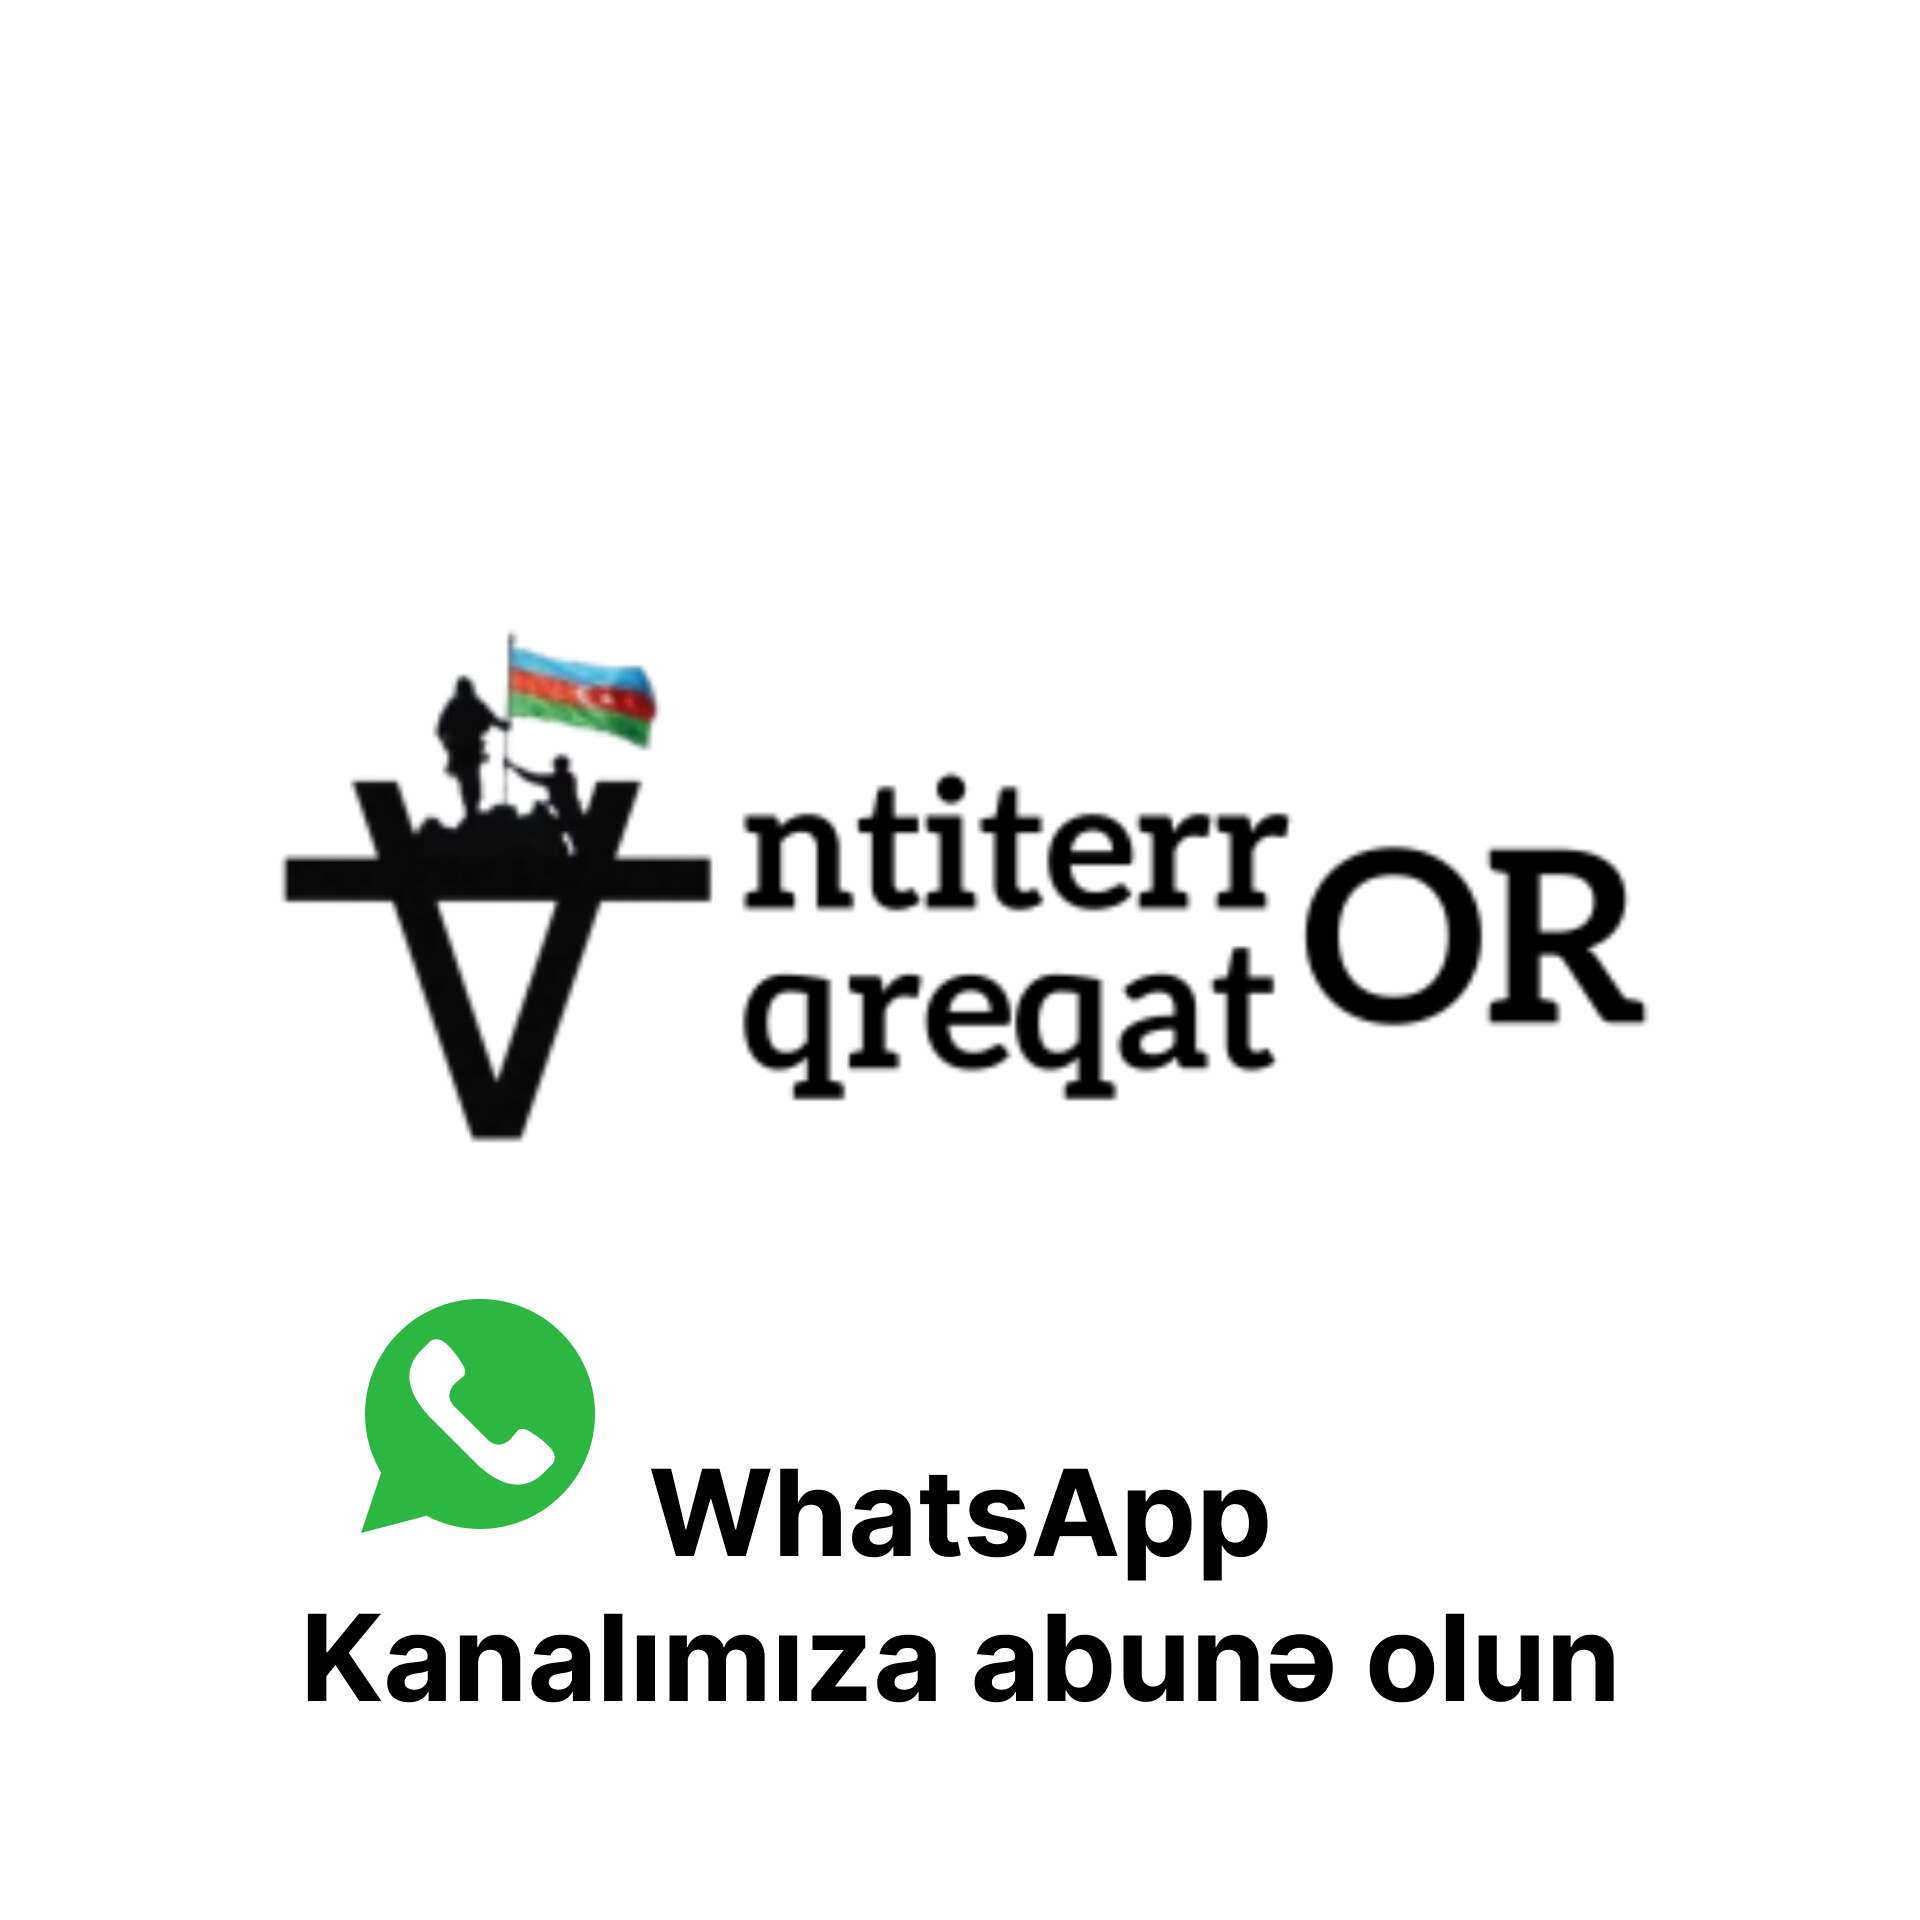 Aqreqator whatsapp kanal